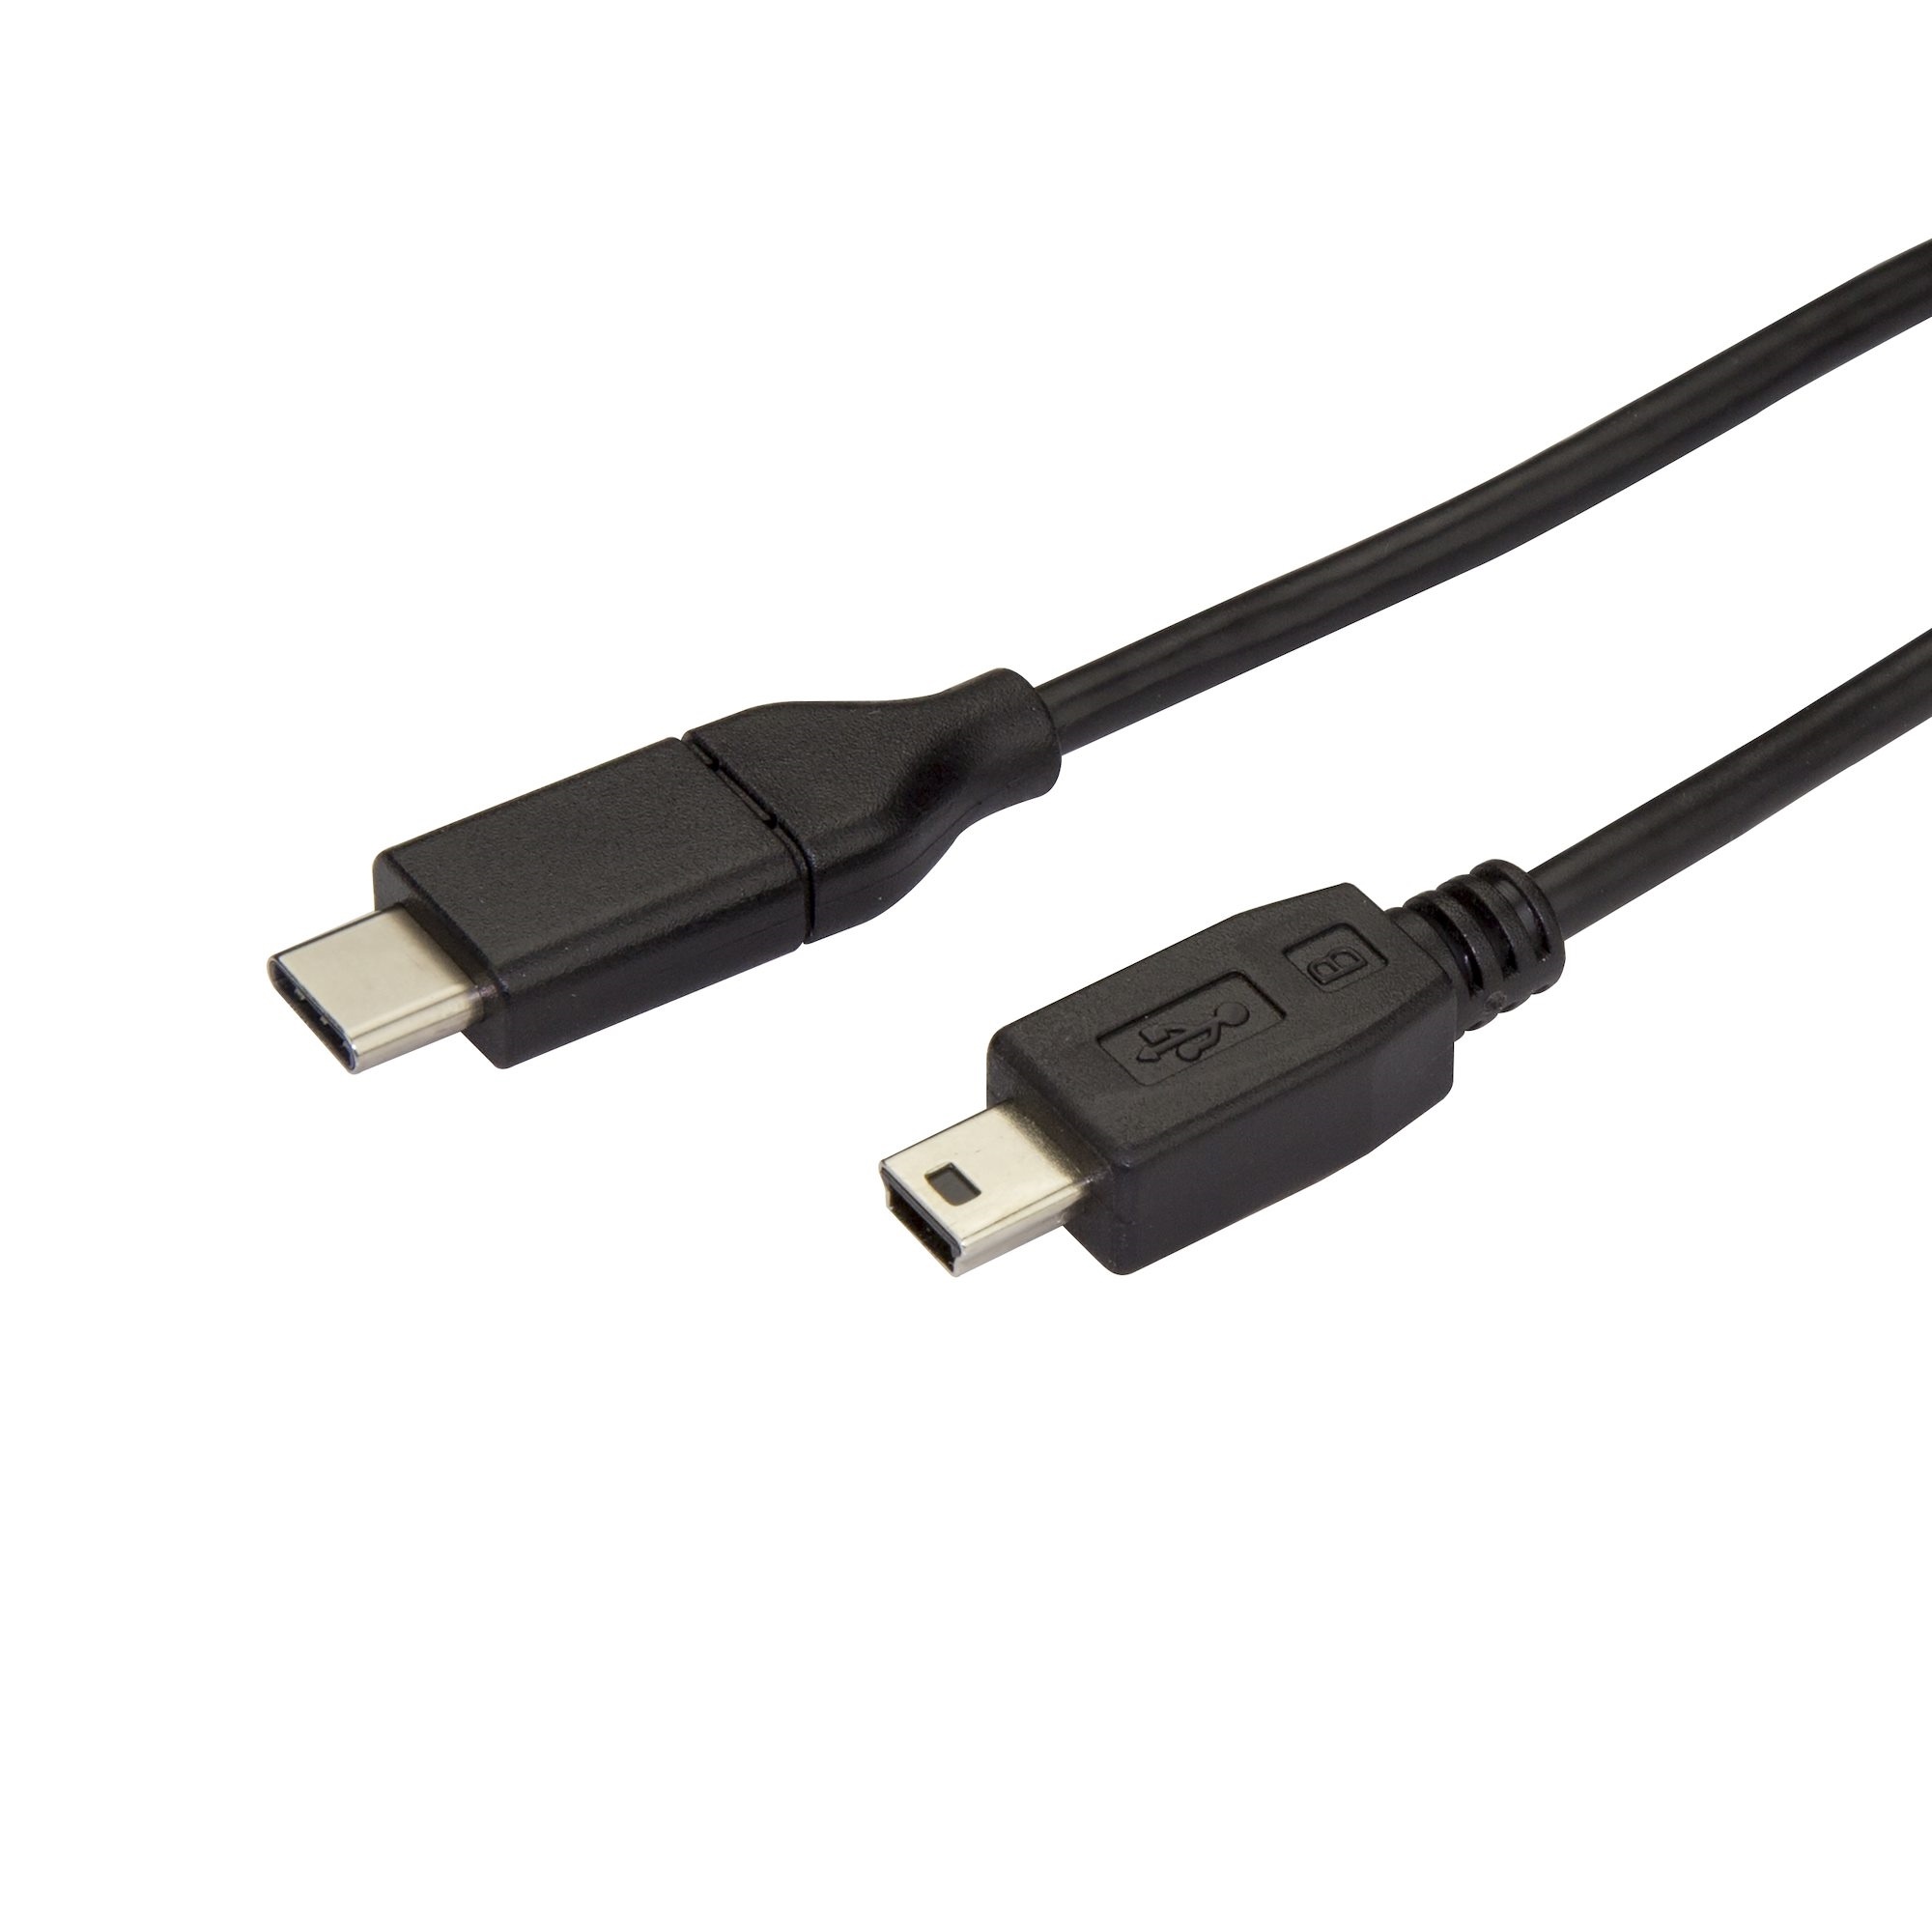 StarTech USB C to Mini USB Cable M/M - USB 2.0 (2m)